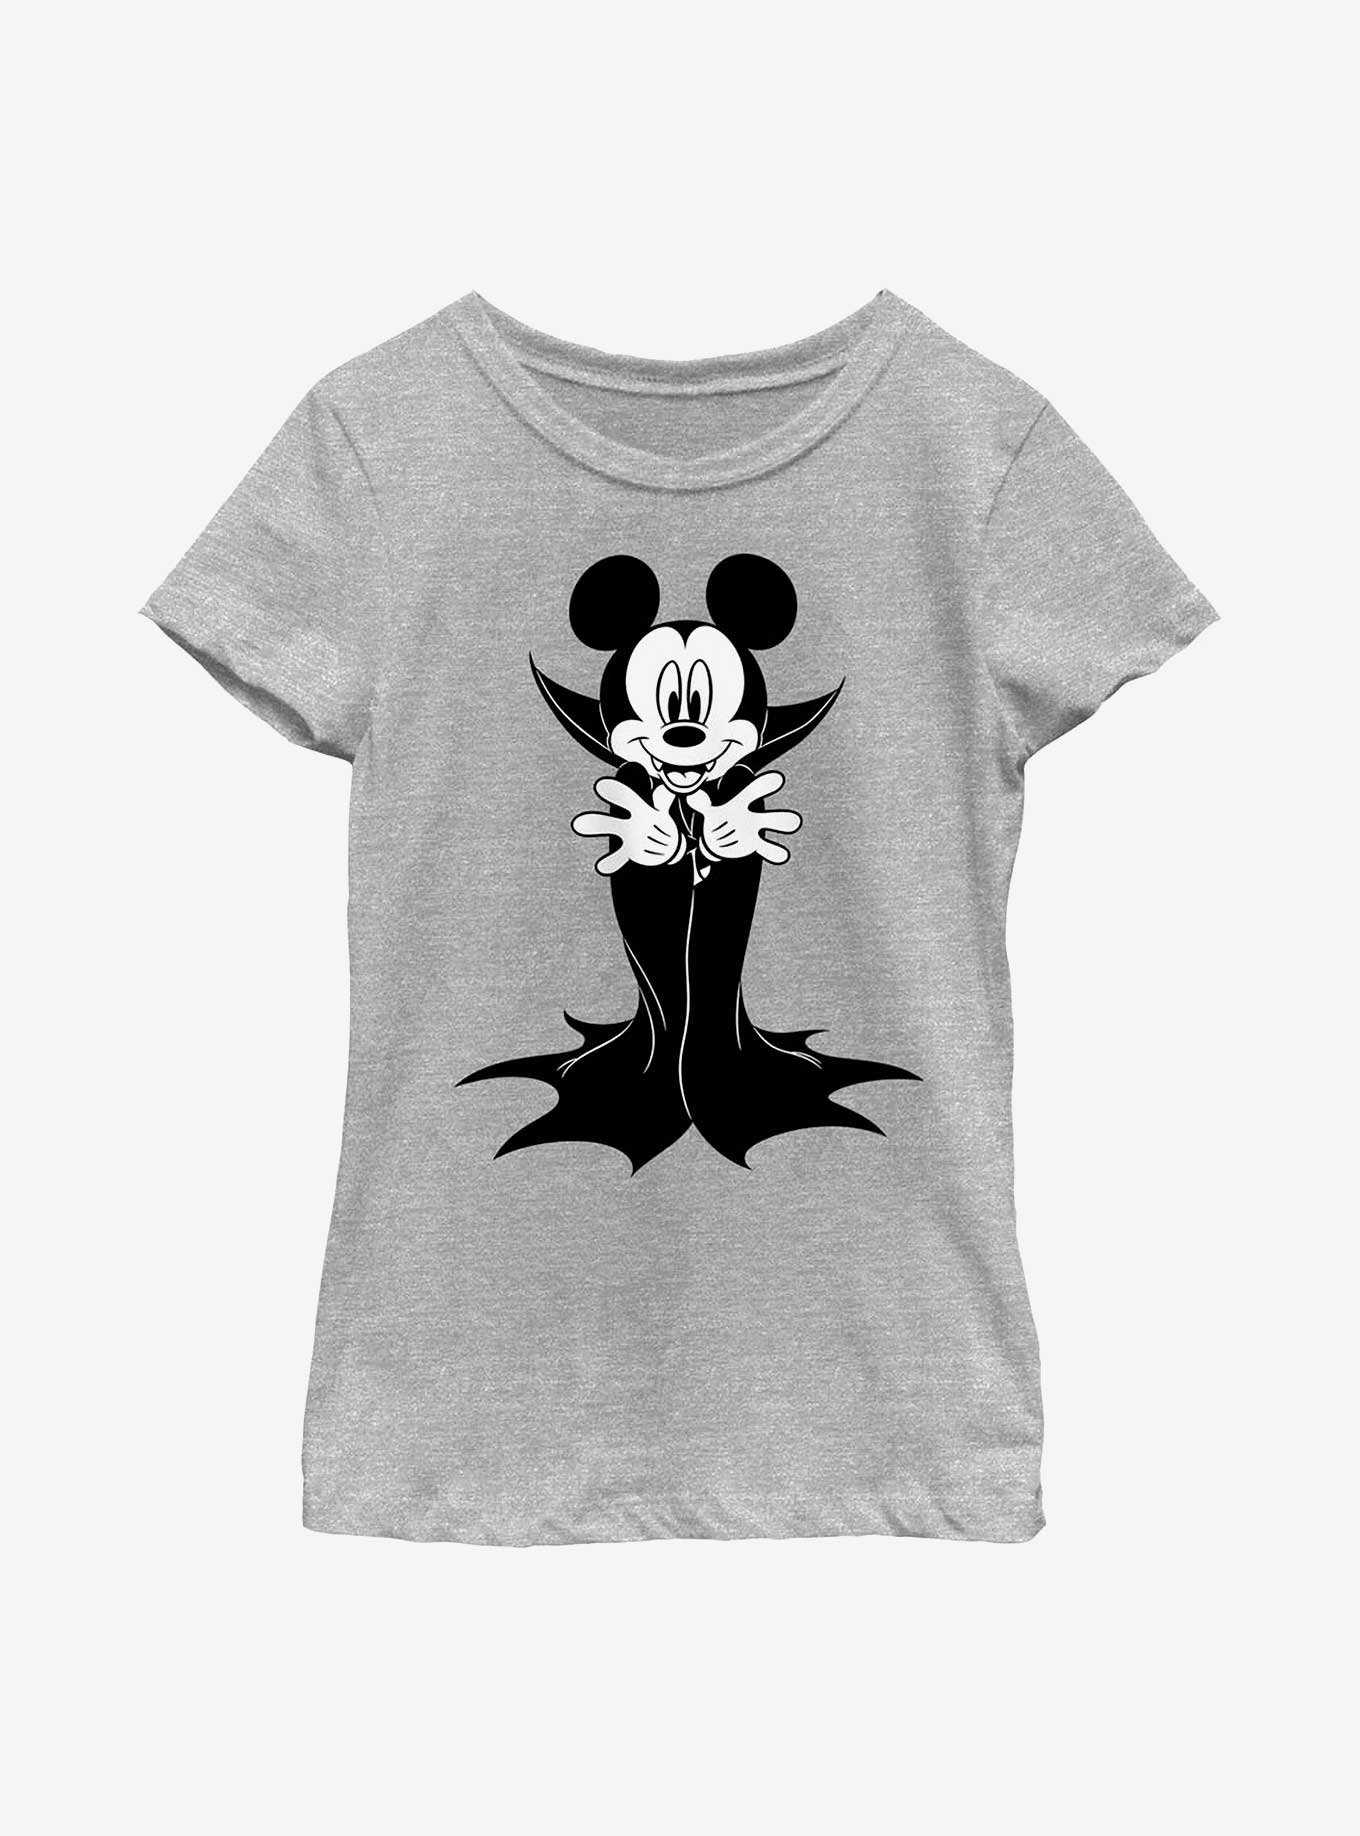 Disney Mickey Mouse Vampire Youth Girls T-Shirt, , hi-res